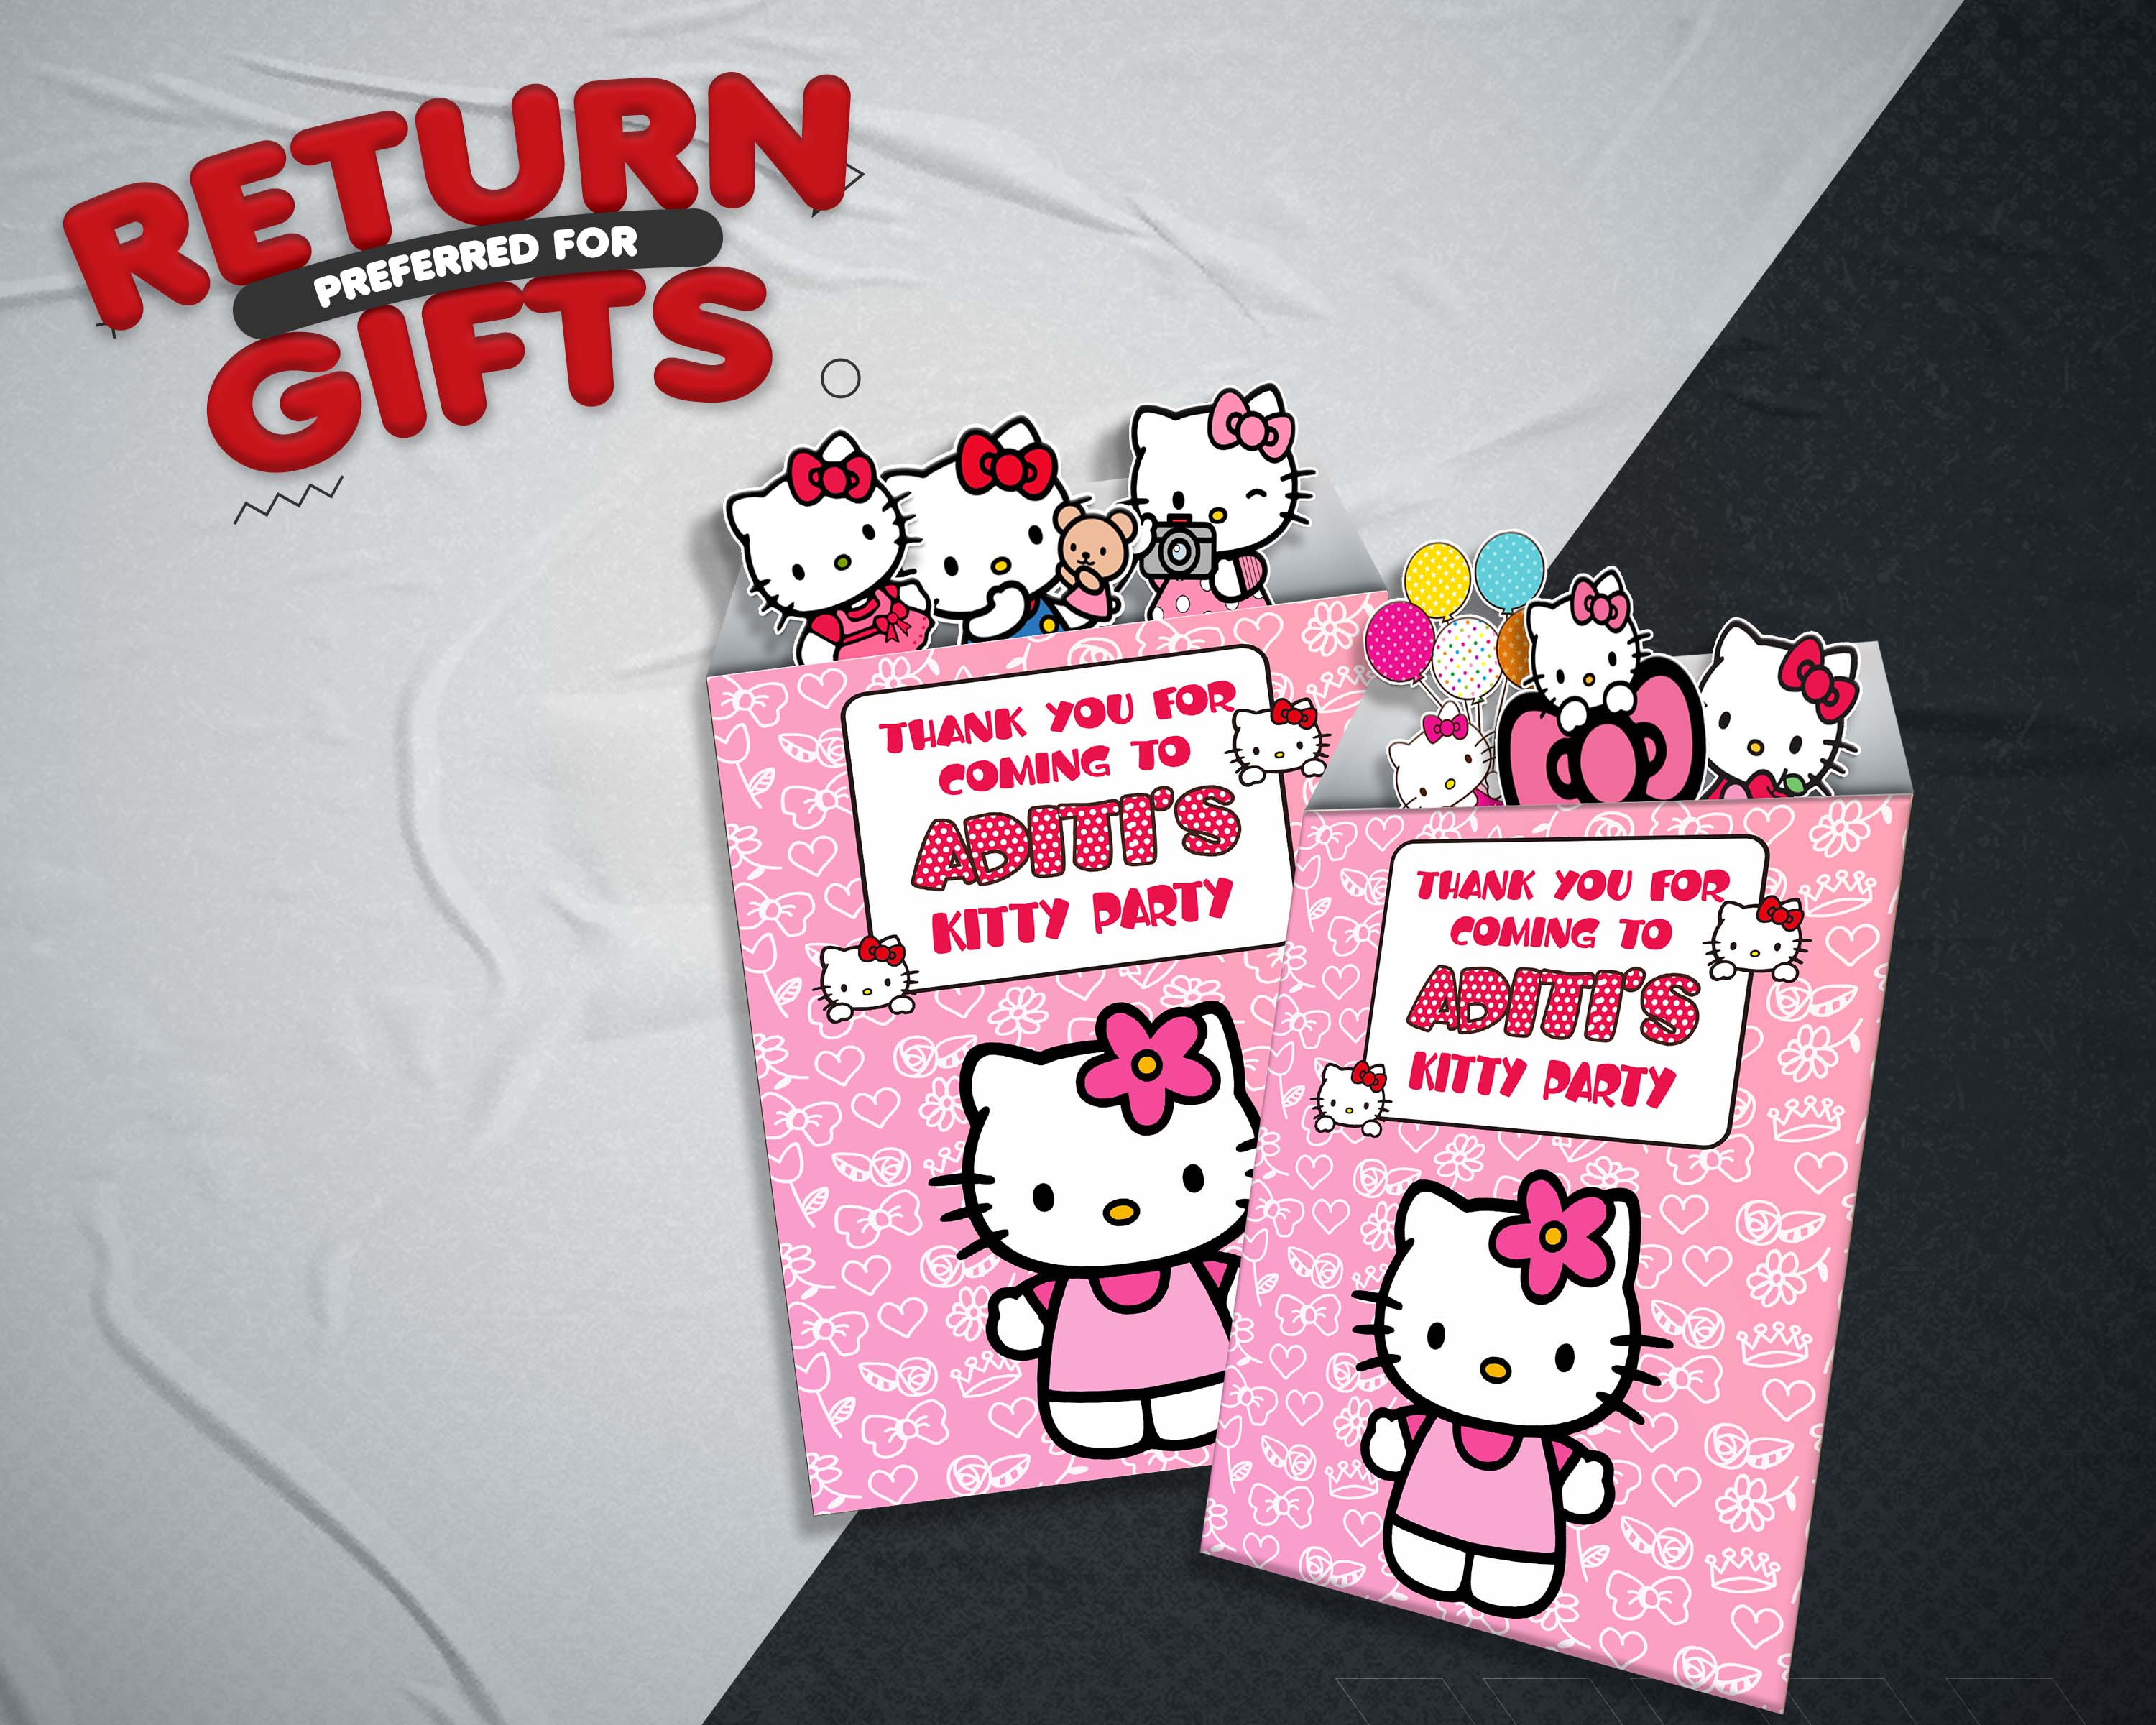 Kitty Party Return Gifts | Handmade Return Gift Ideas - YouTube